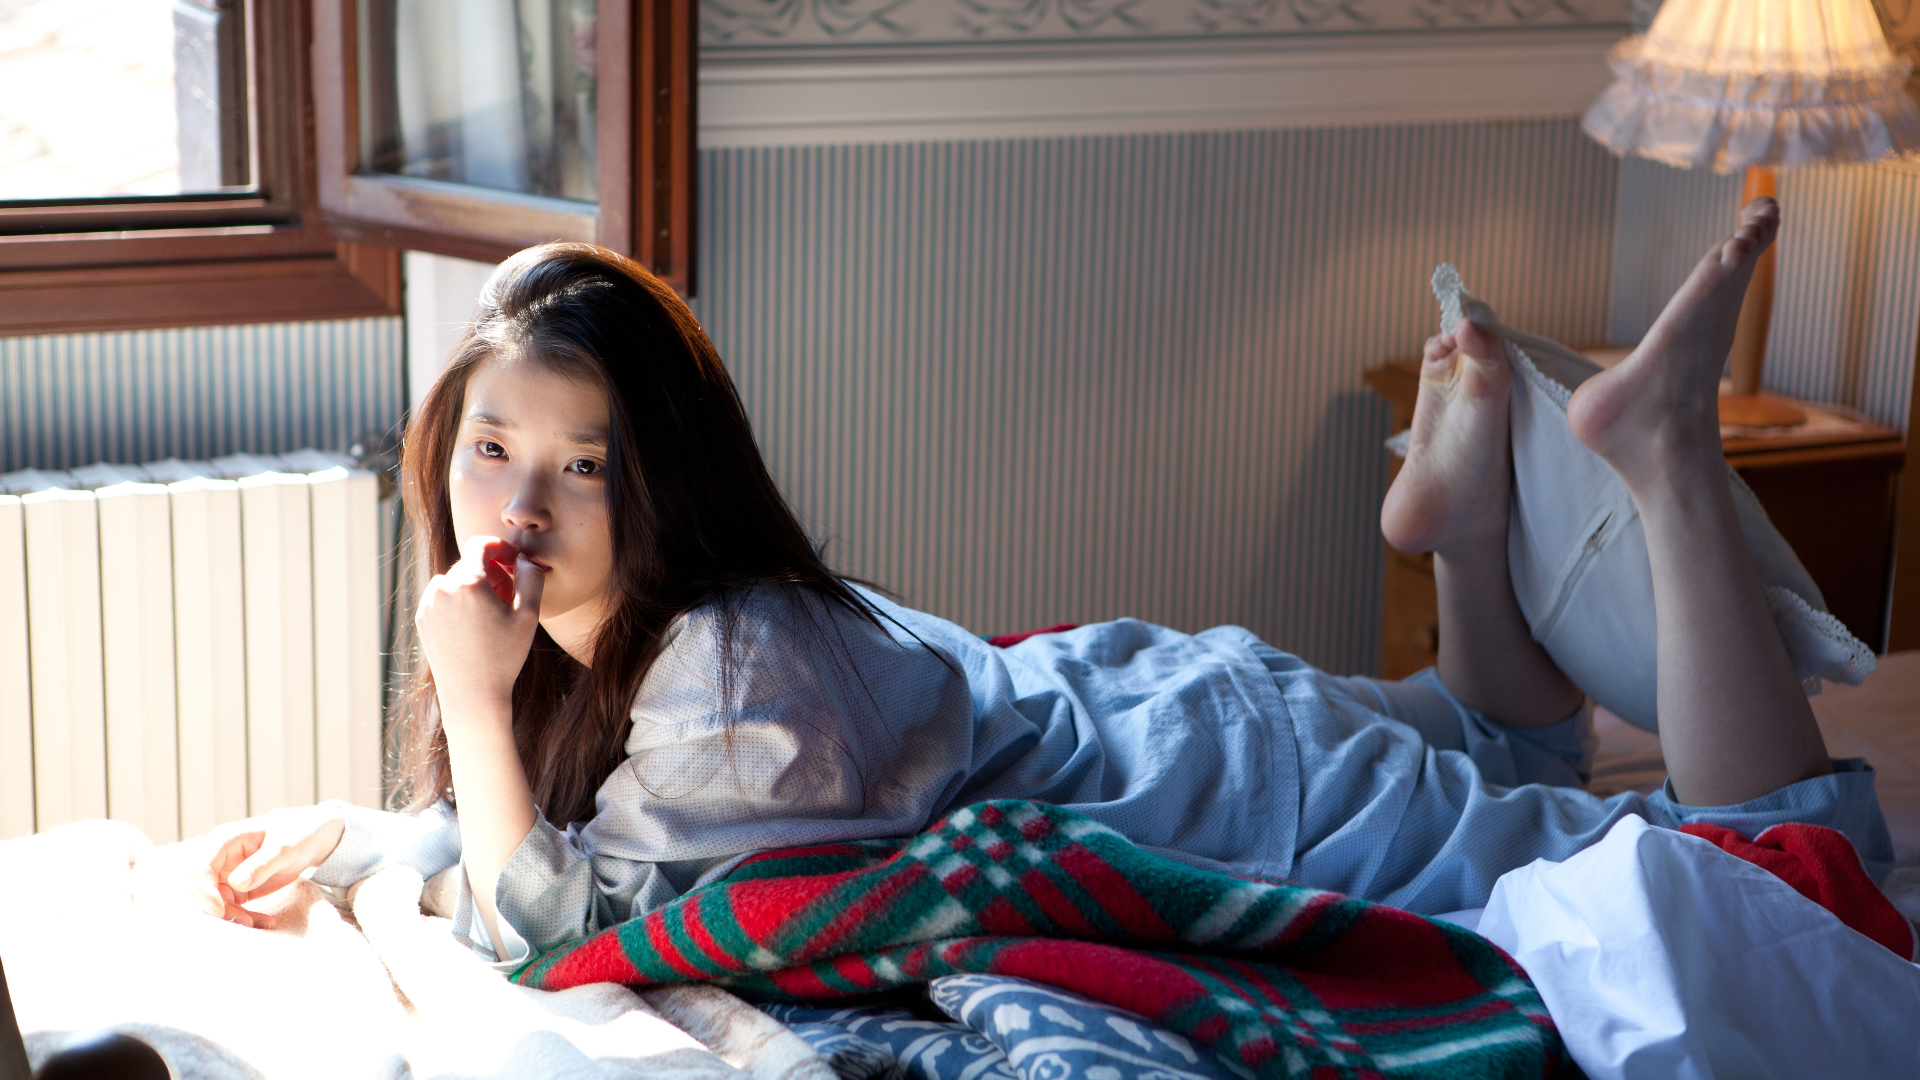 IU Iu Lee Ji Eun Women In Bed Korean Long Hair Barefoot 1920x1080